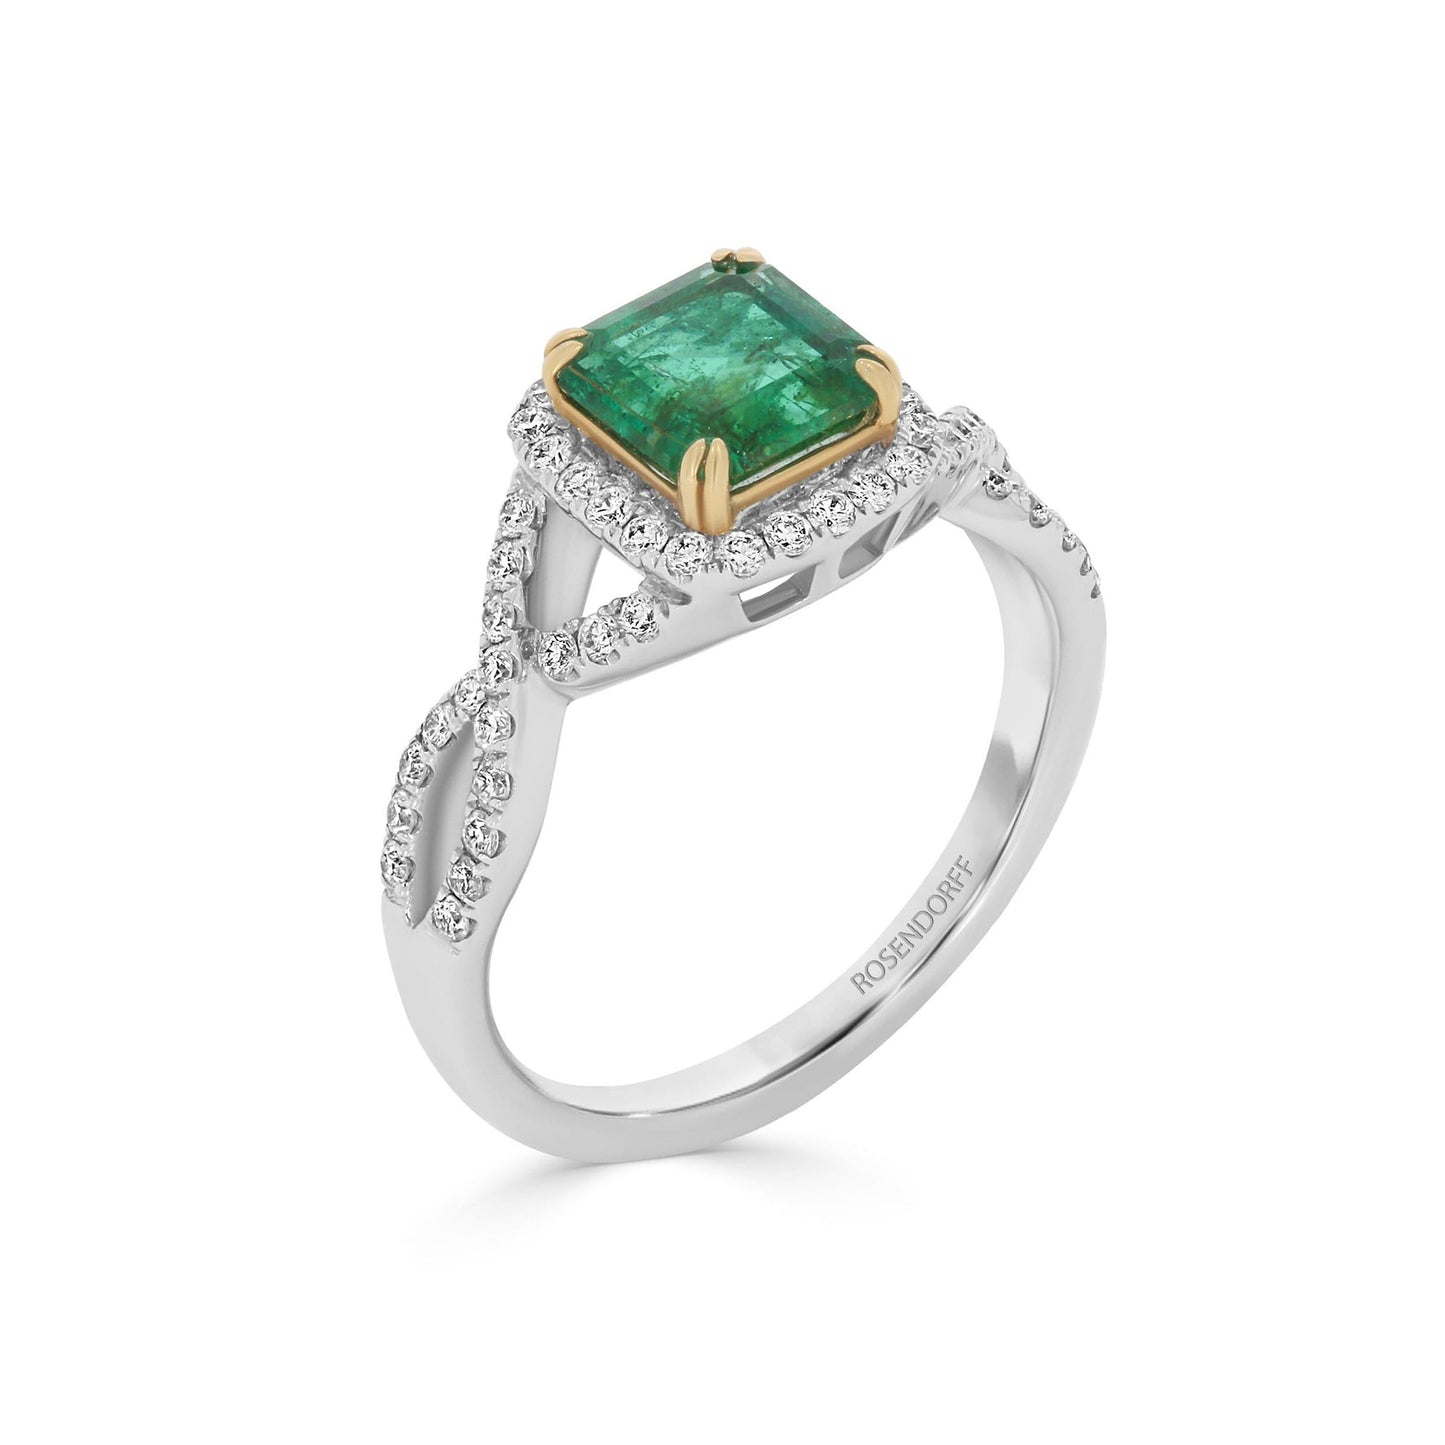 Natural Emerald and Diamond Ring